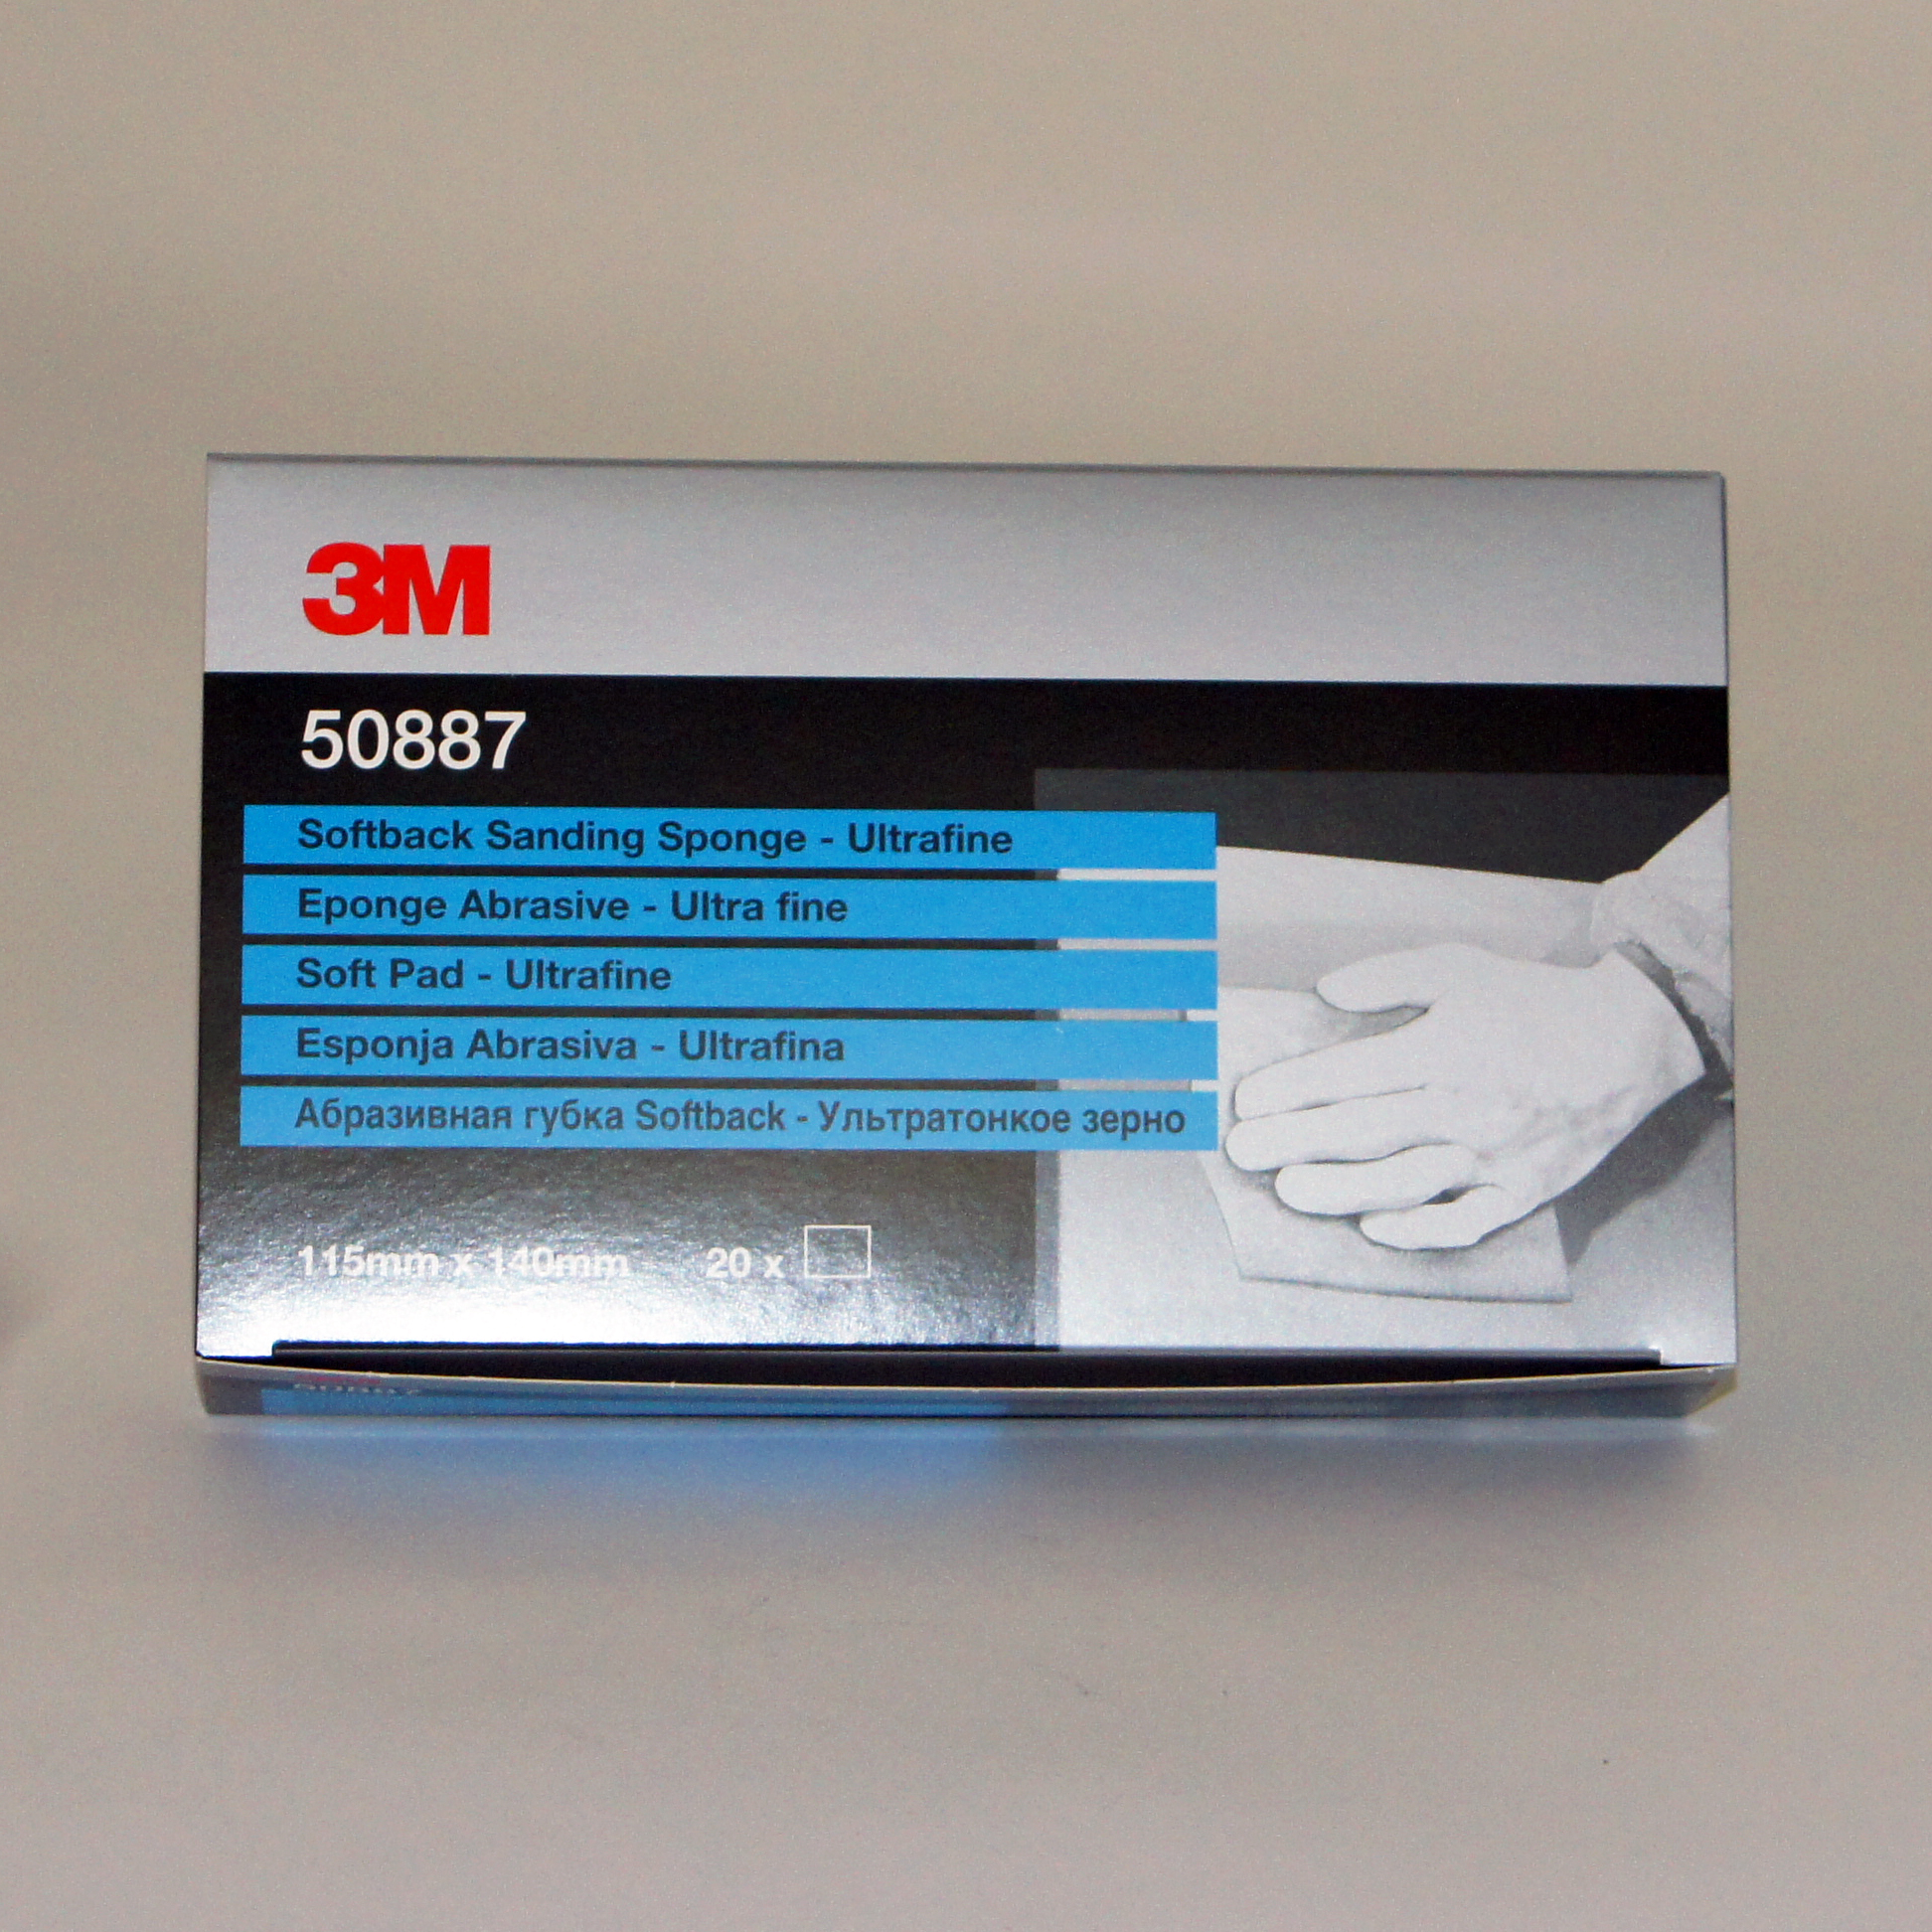 3M 50887 Soft Pad ultrafine